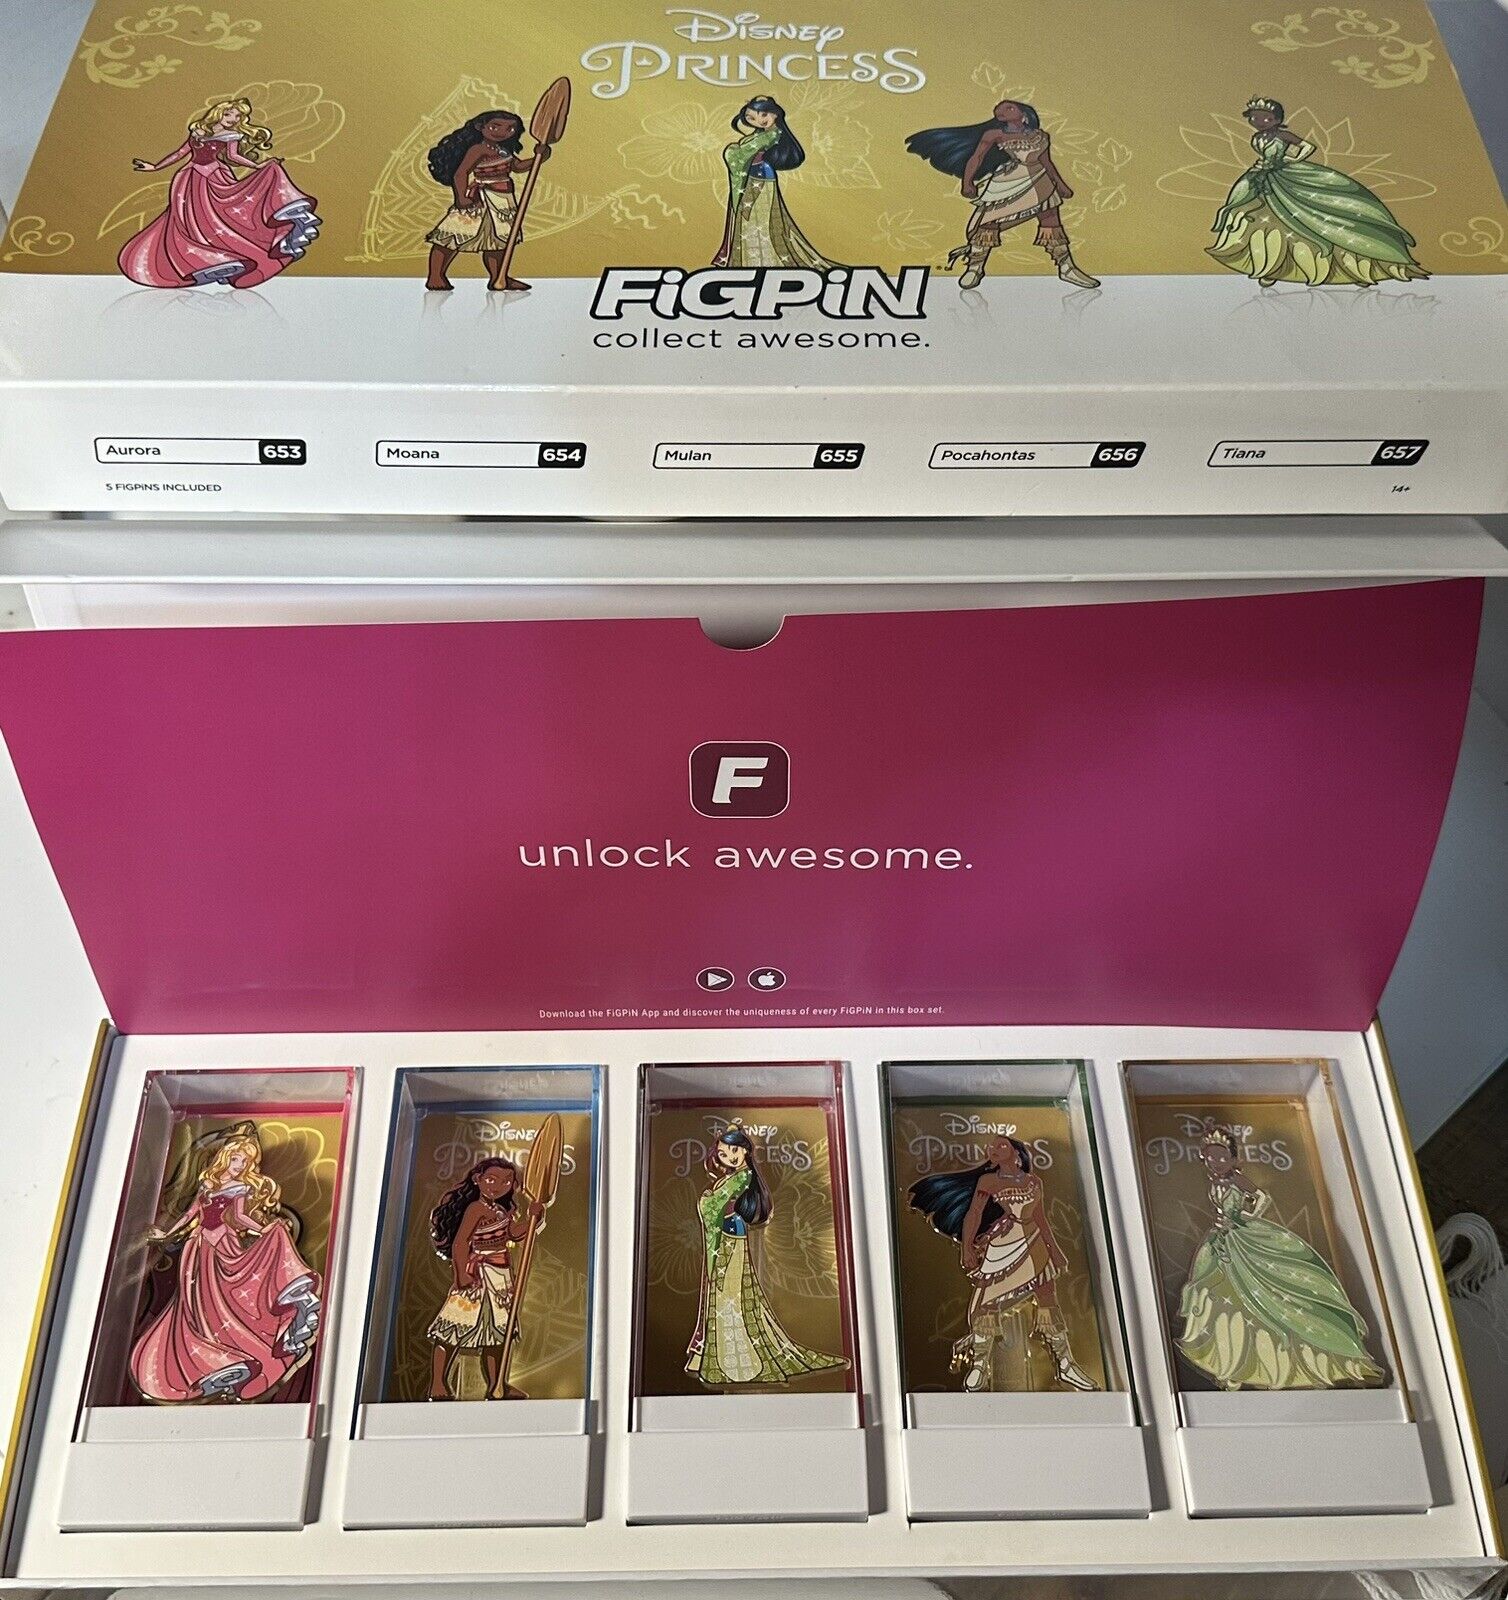 Figpin 2019 Disney Princesses Deluxe Gold Box Set No Logo Pin Displayed LE 1000